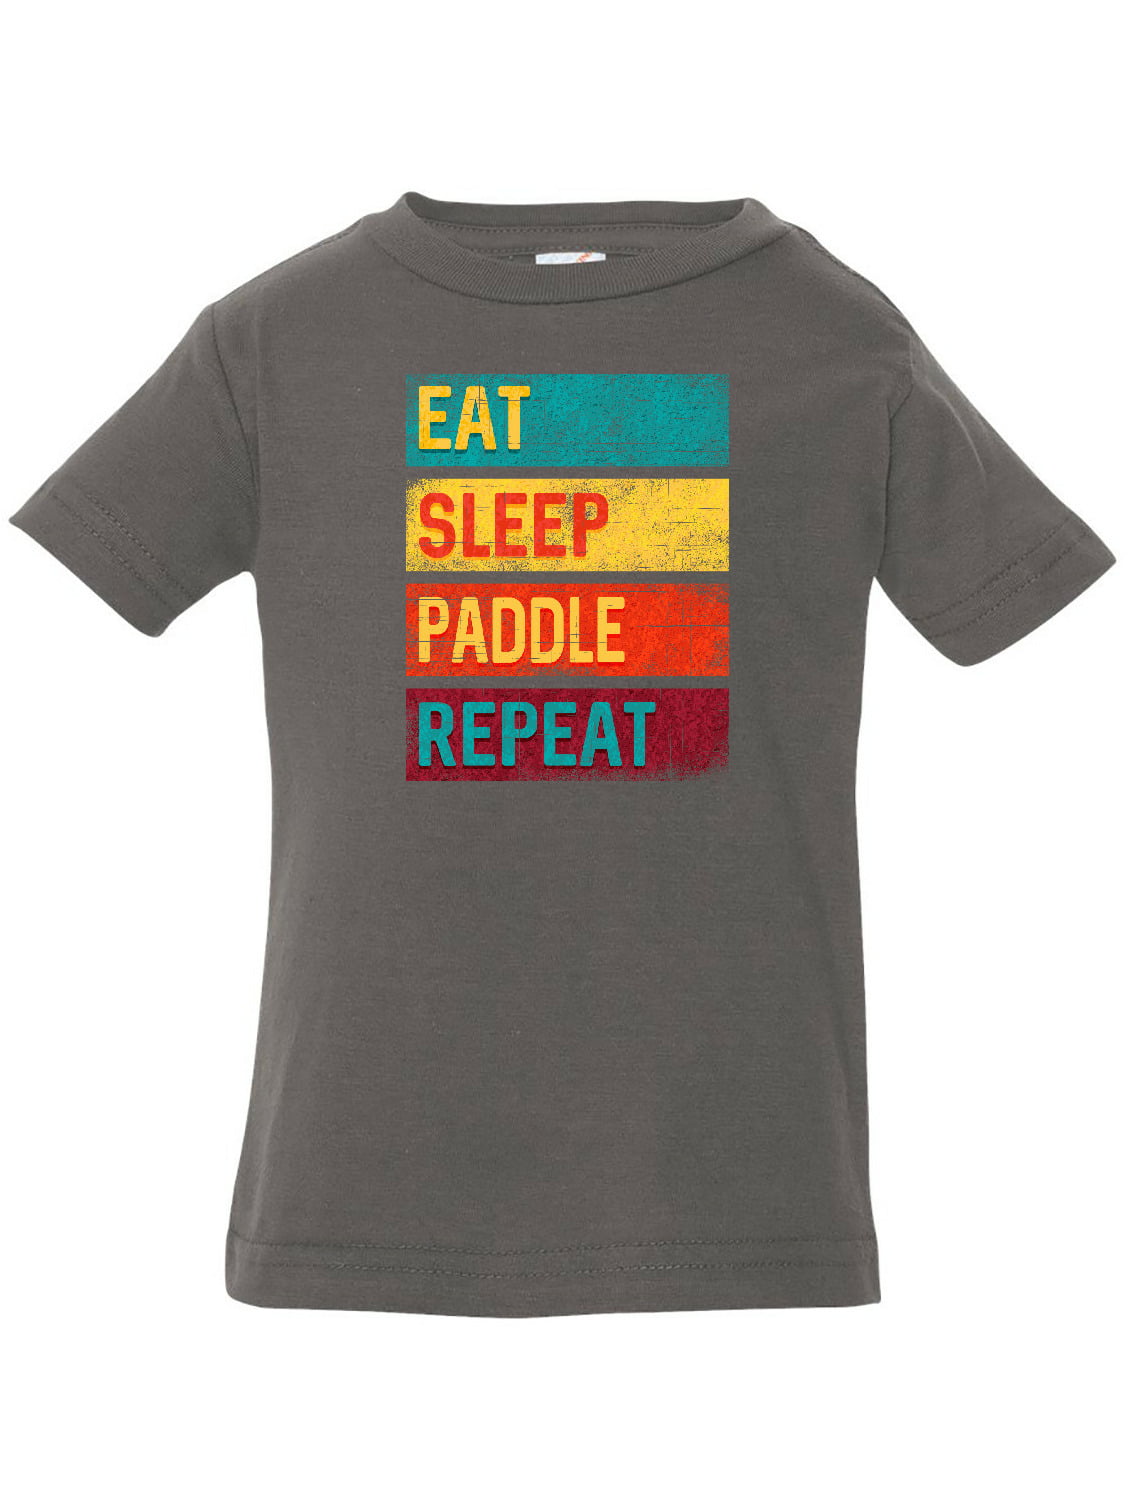 Eat sleep repeat short sleeve t-shirt paddle